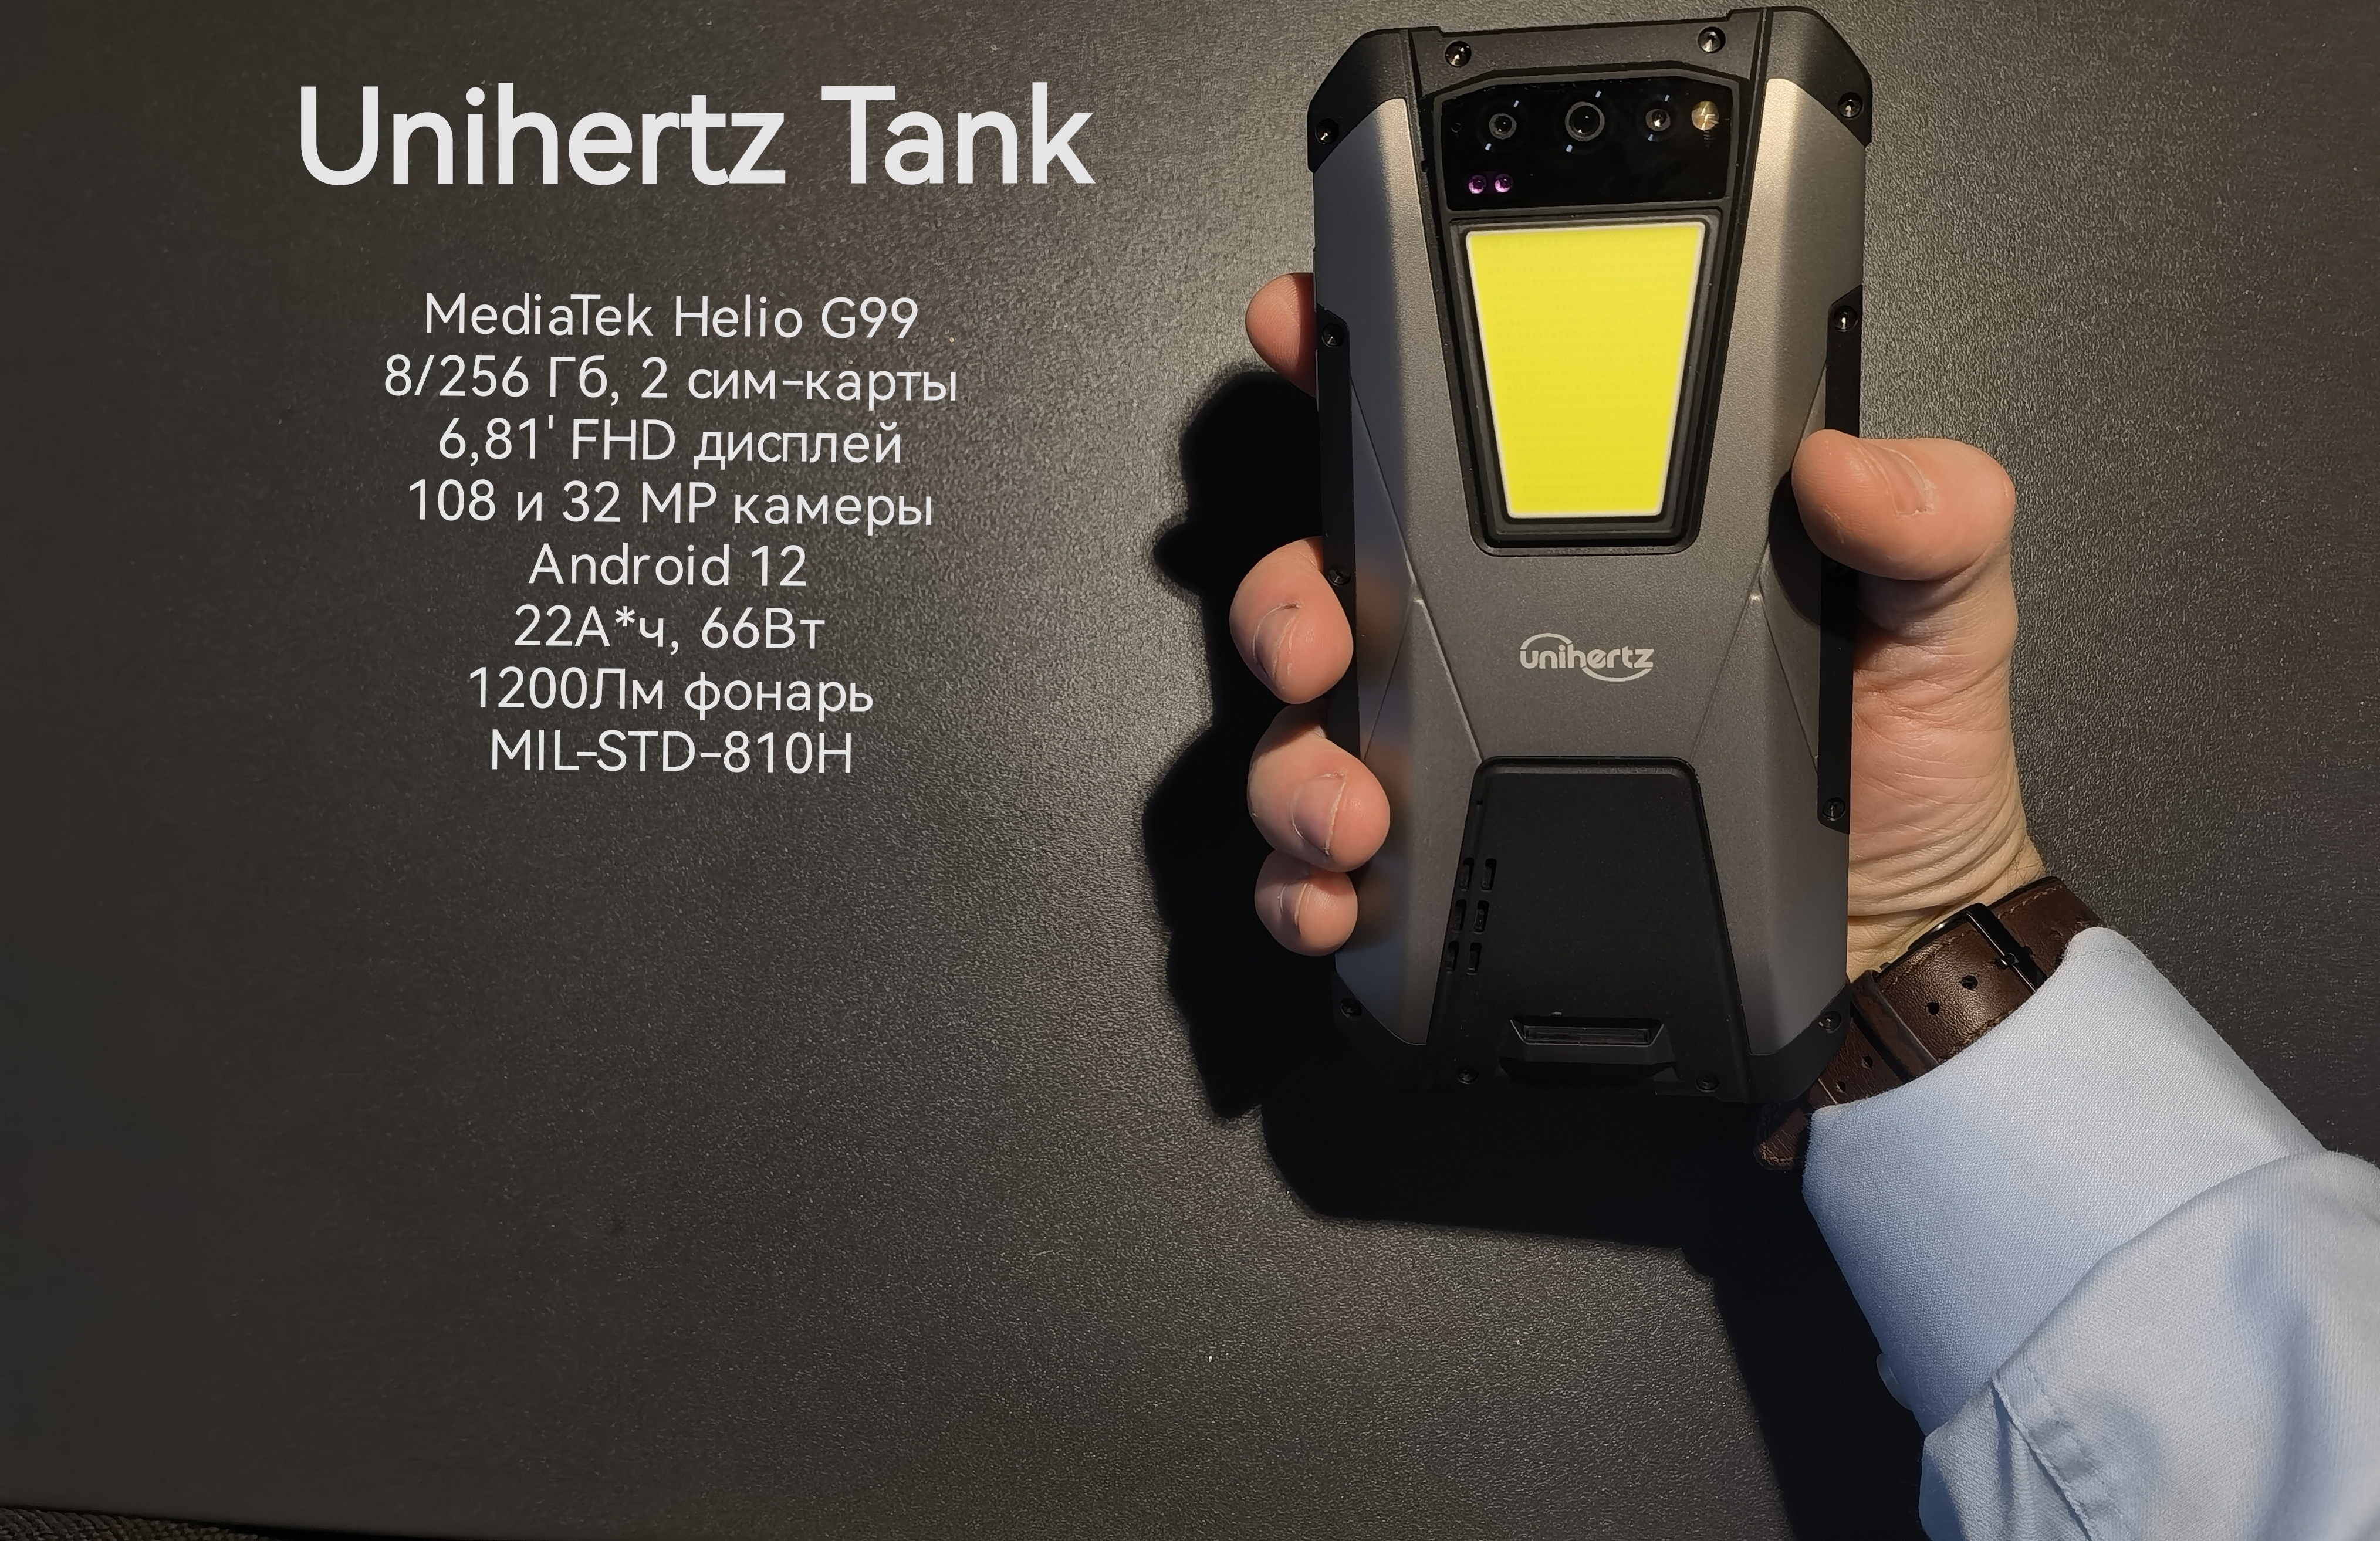 Unihertz 8849 tank 1. Смартфон unihertz Tank. Unihertz Tank 22000. Unihertz Tank 2 смартфон. Unihertz Tank 01.